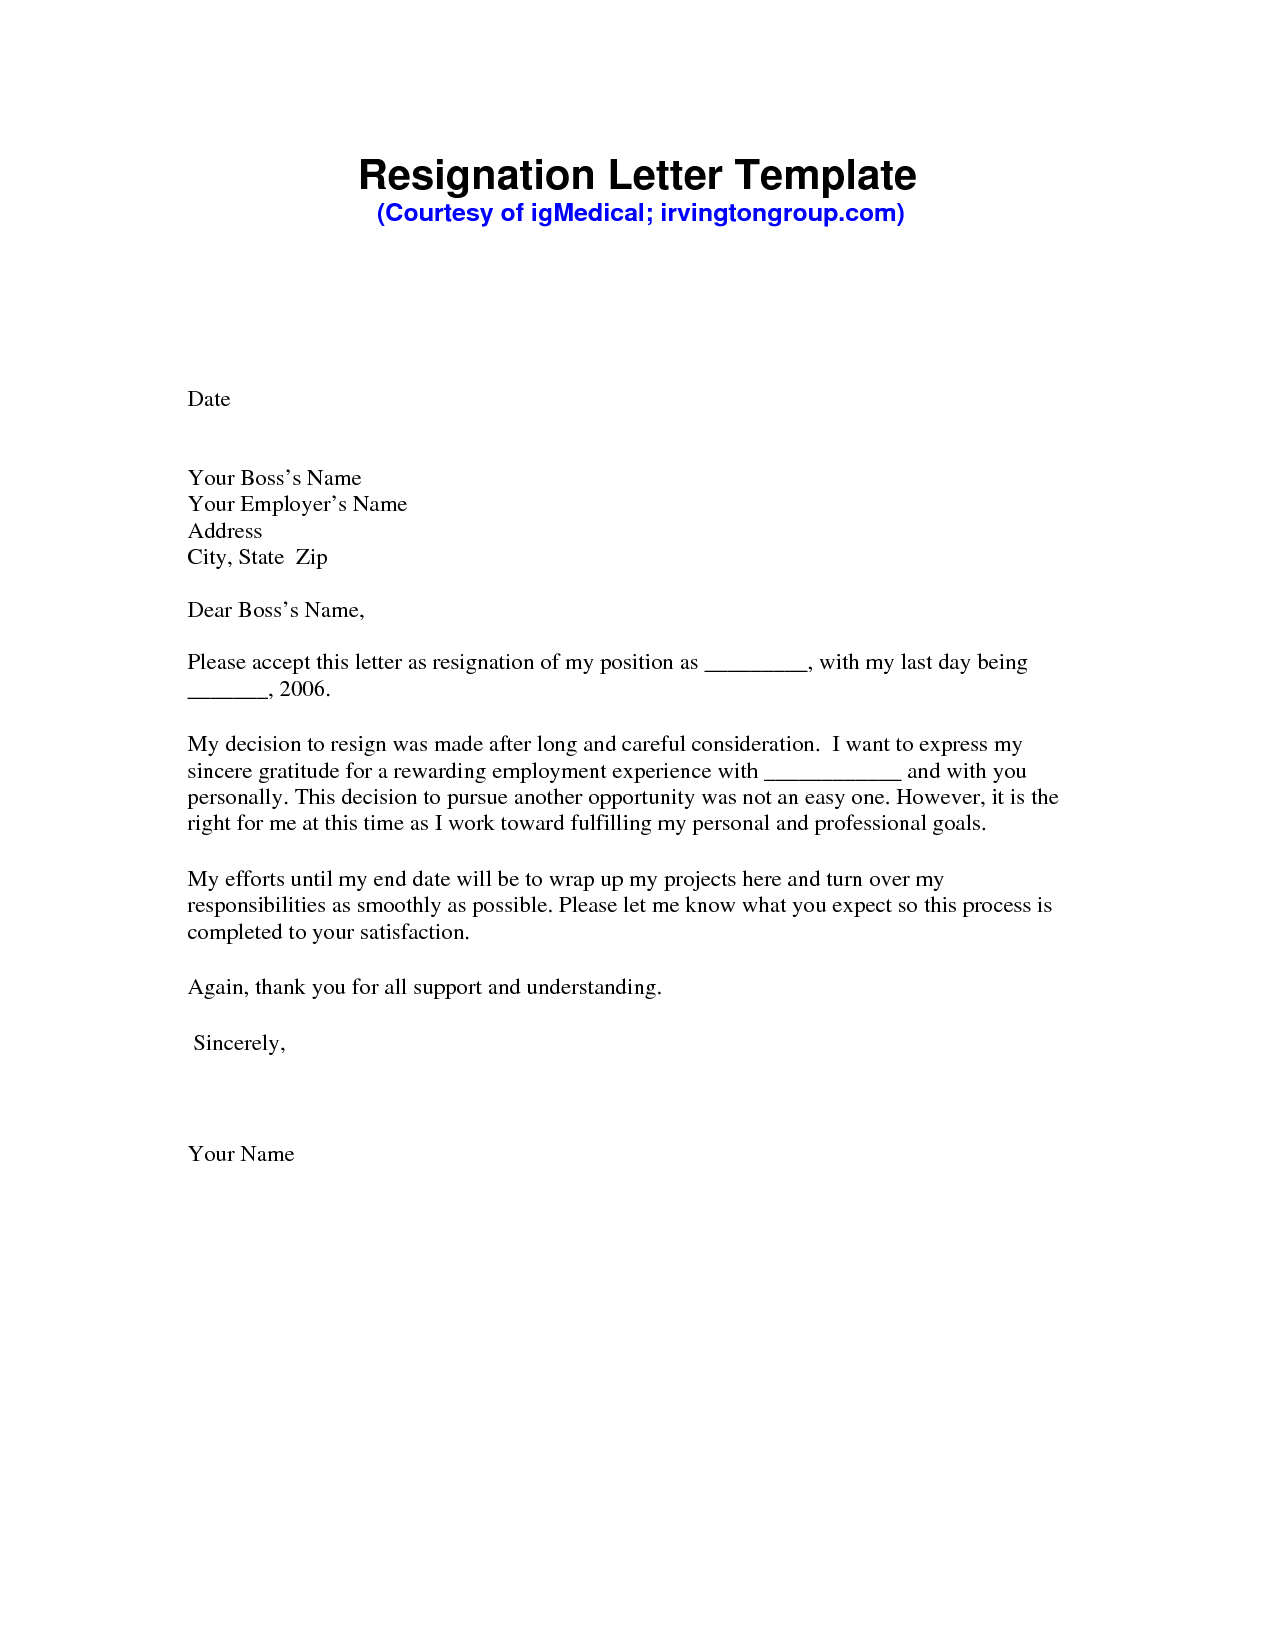 Standard Resignation Letter Template Word - Resignation Letter Sample Pdf Resignation Letter